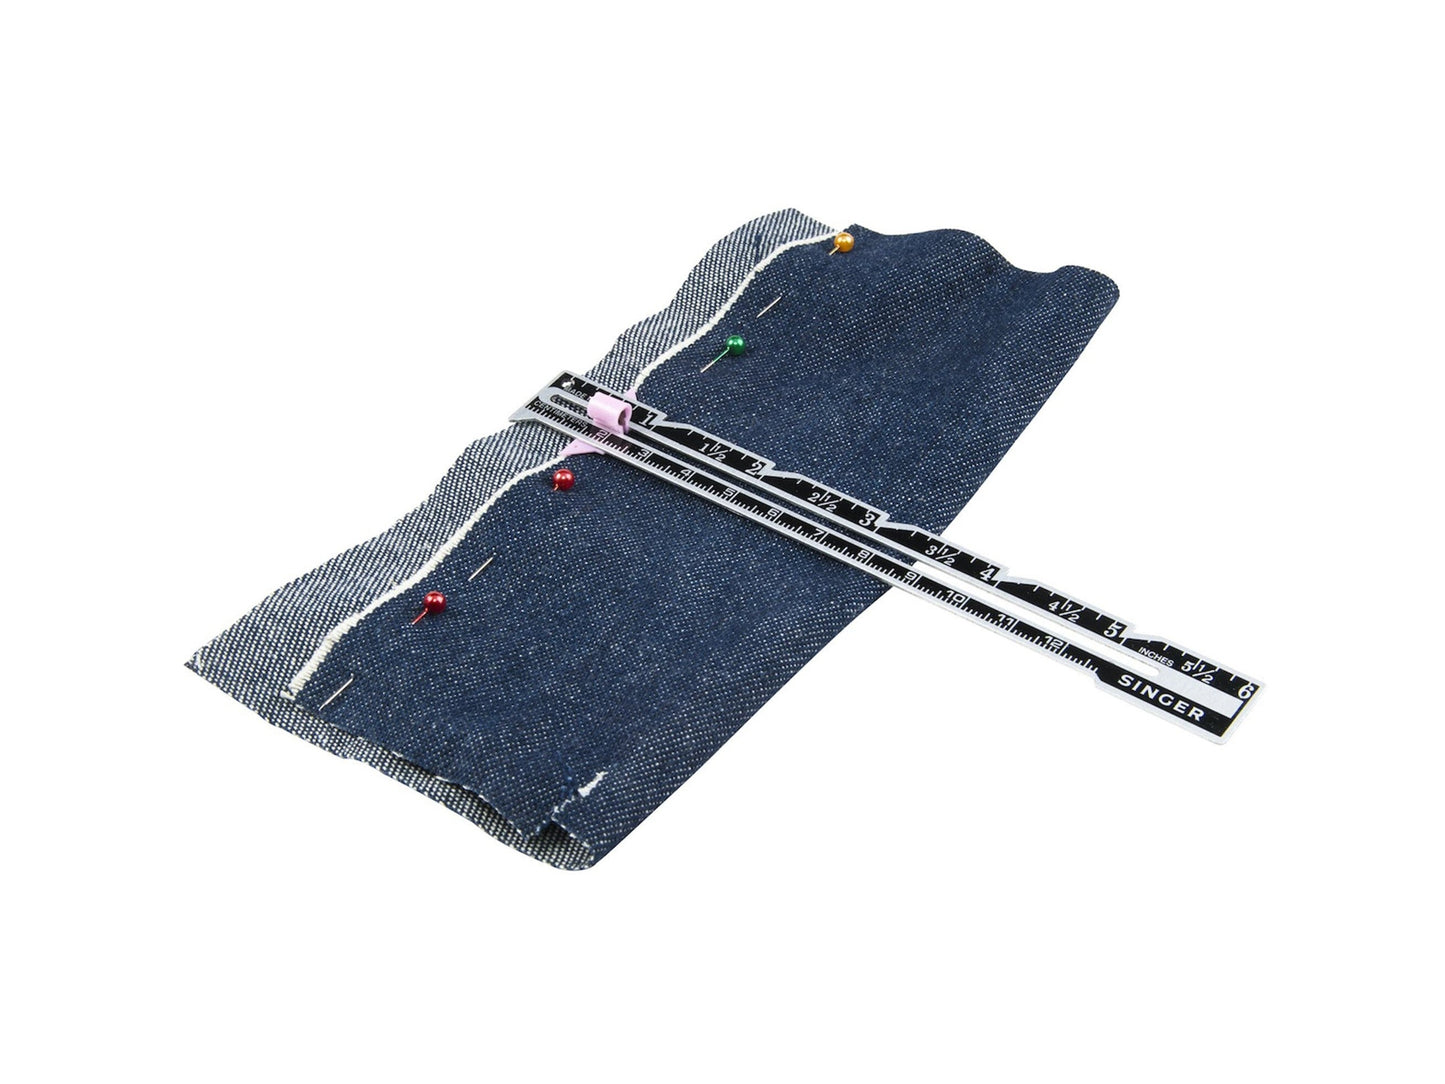 Singer 6" Sewing Gauge with slider | sewing notions, knitting gauge, stitch ruler